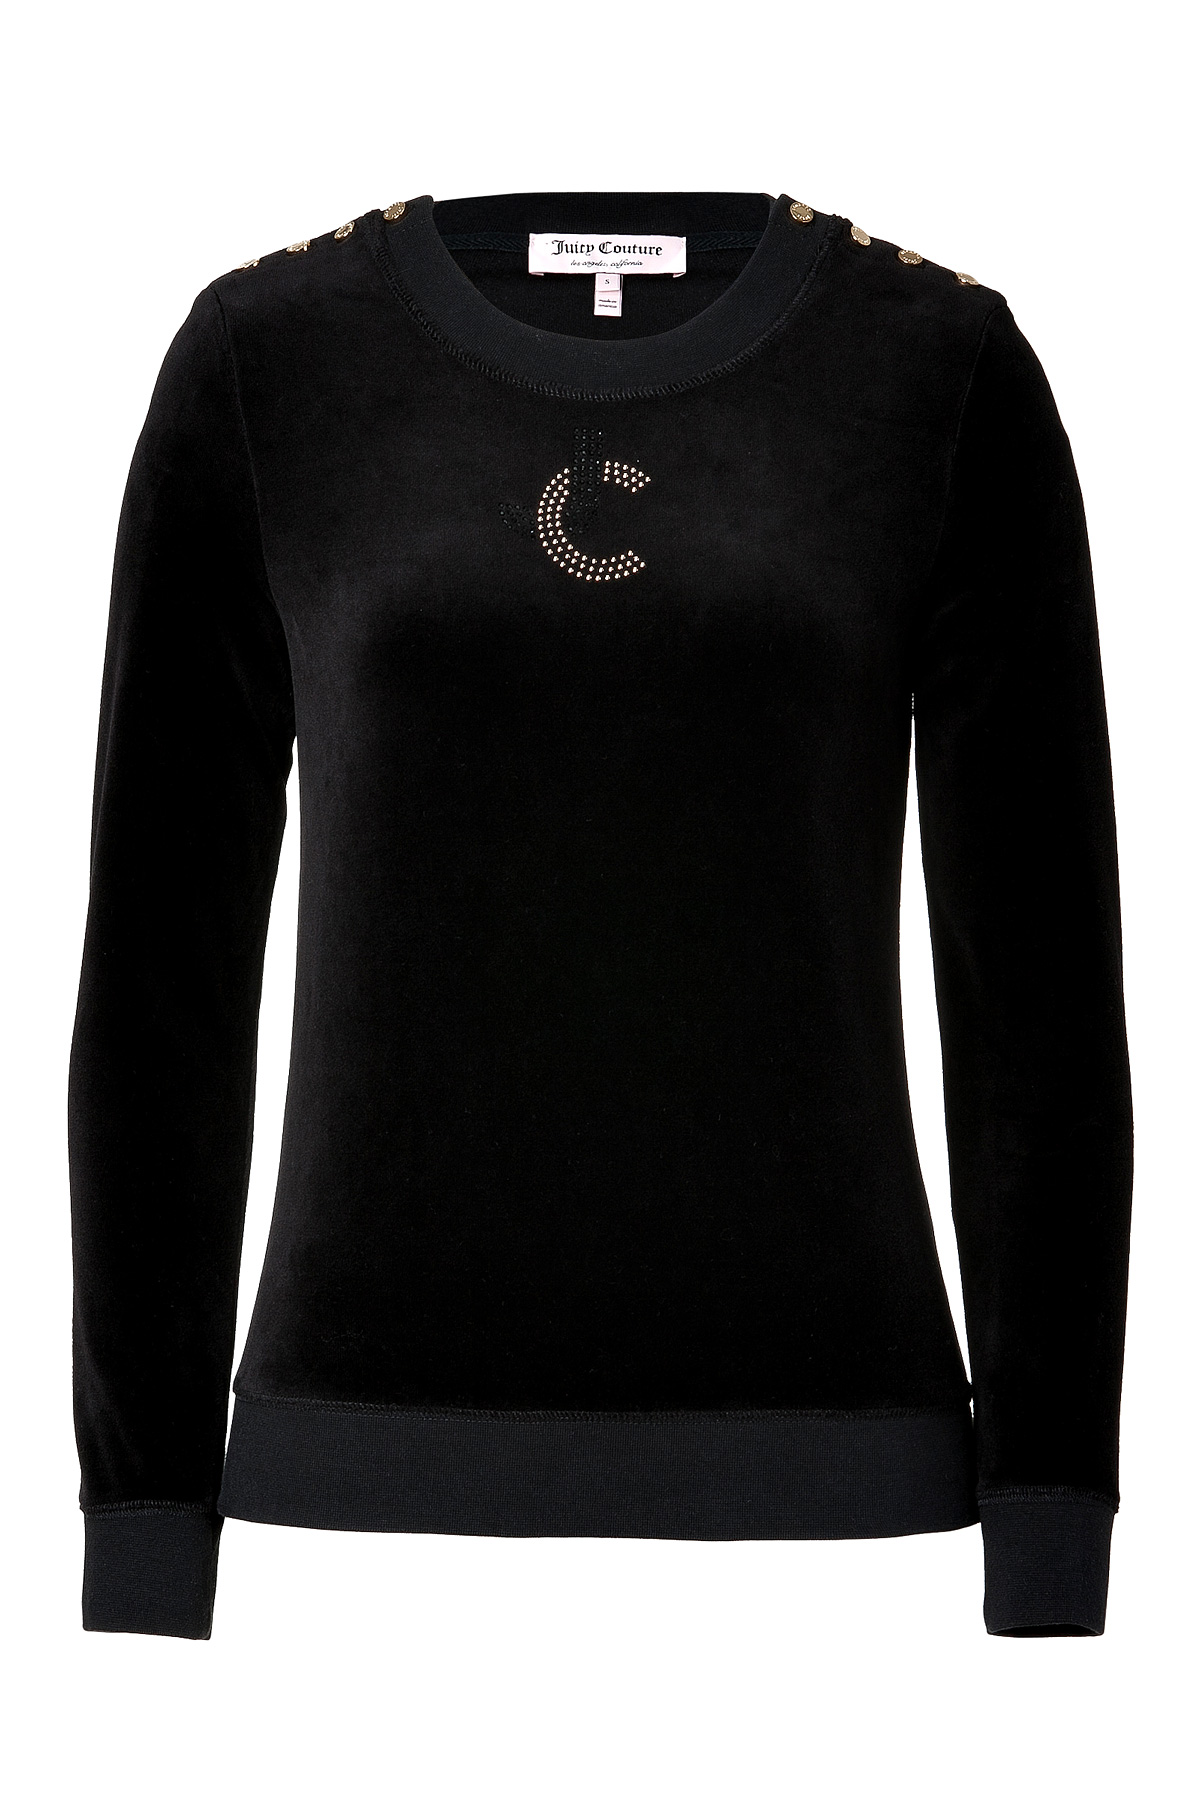 Juicy Couture Black Rhinestone Monogram Velour Pullover in Black | Lyst